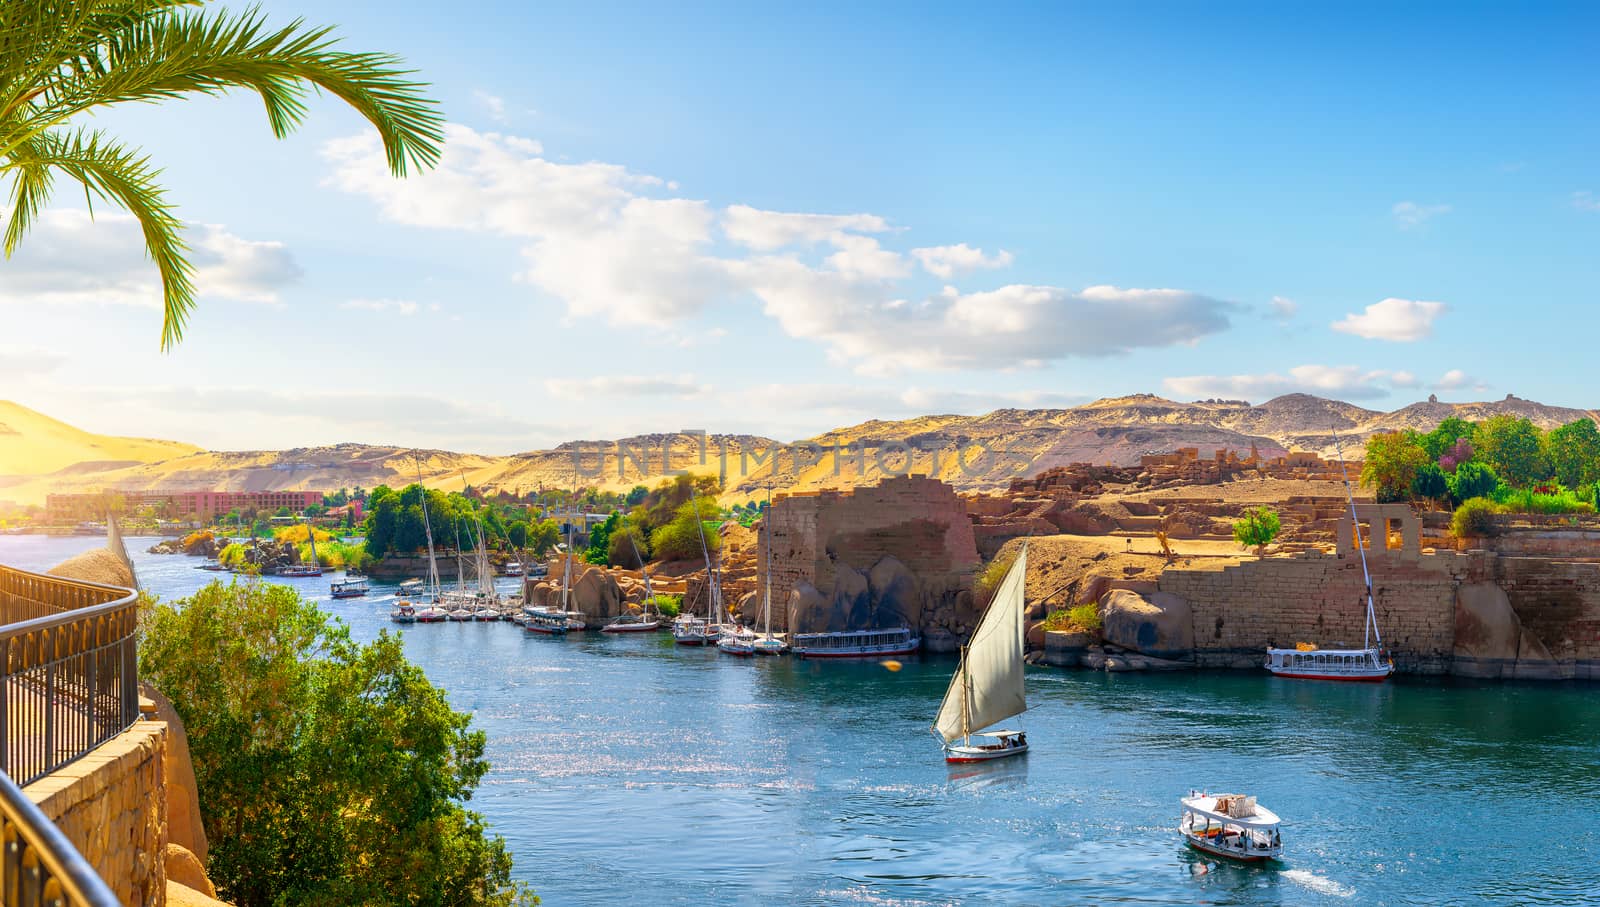 Nile in Aswan by Givaga